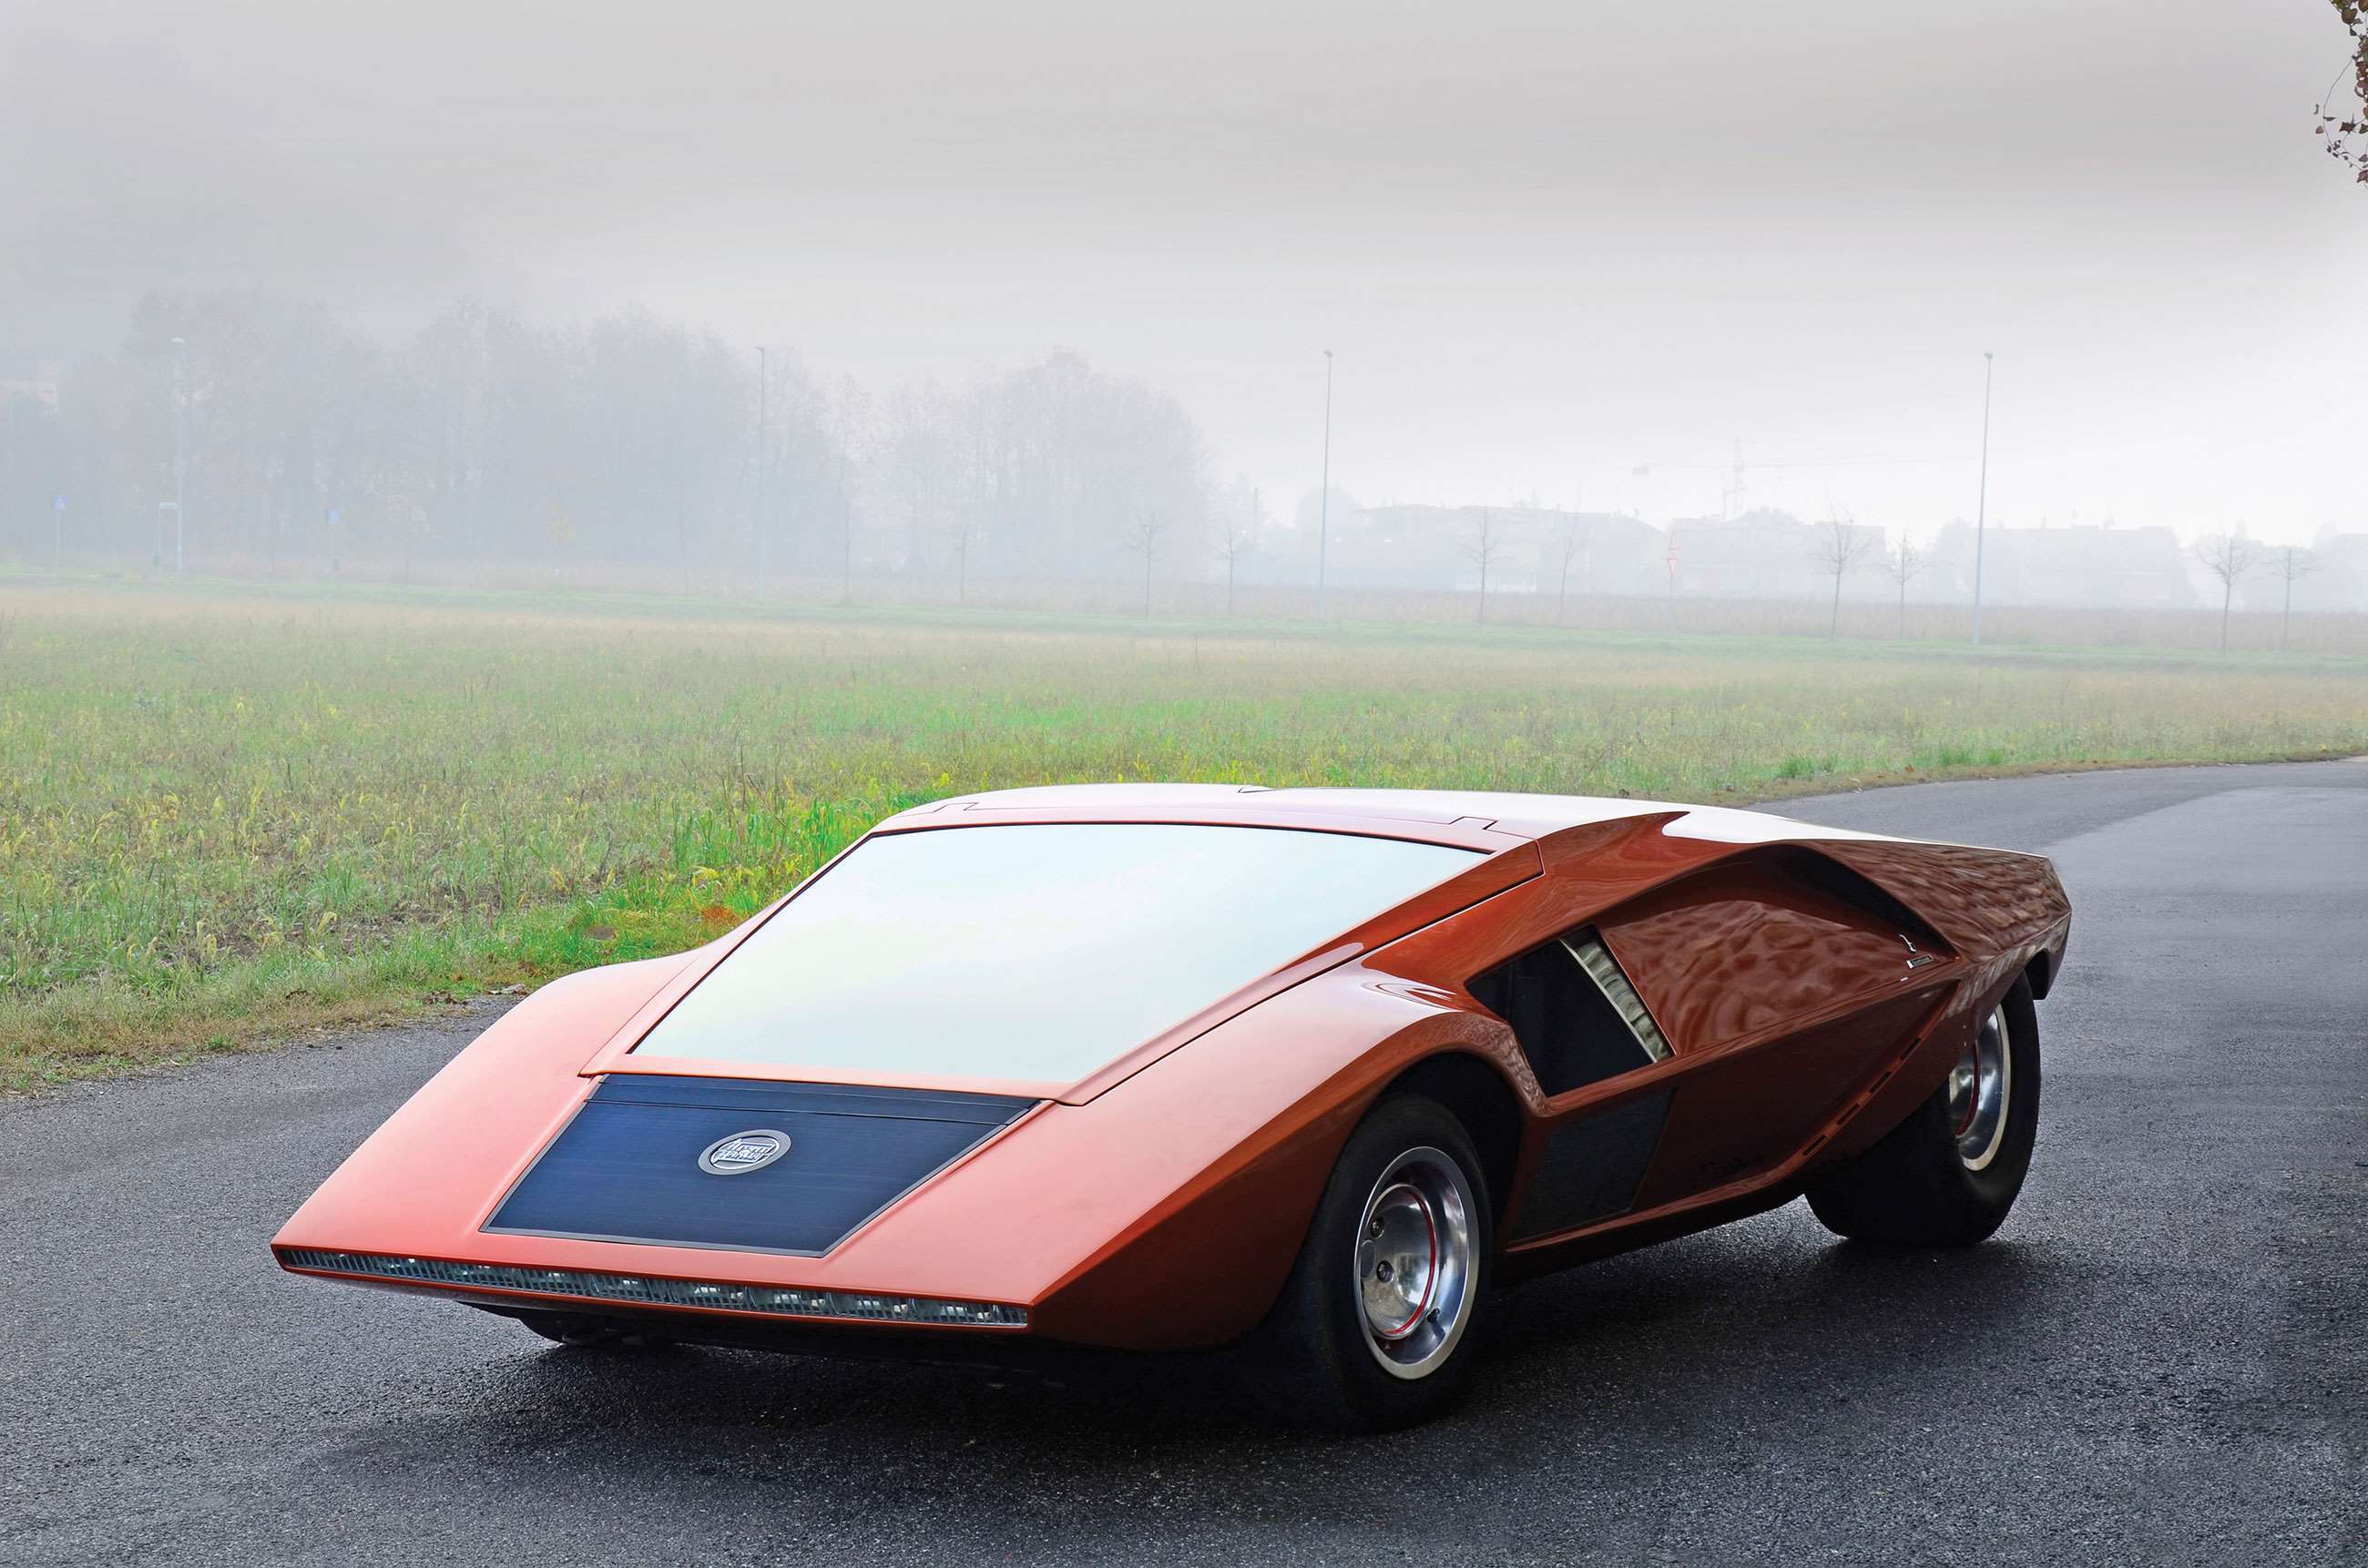 best-lancia-concept-cars-5-1970-lancia-stratos-hf-zero-rm-sothebys-goodwood-15112021.jpg